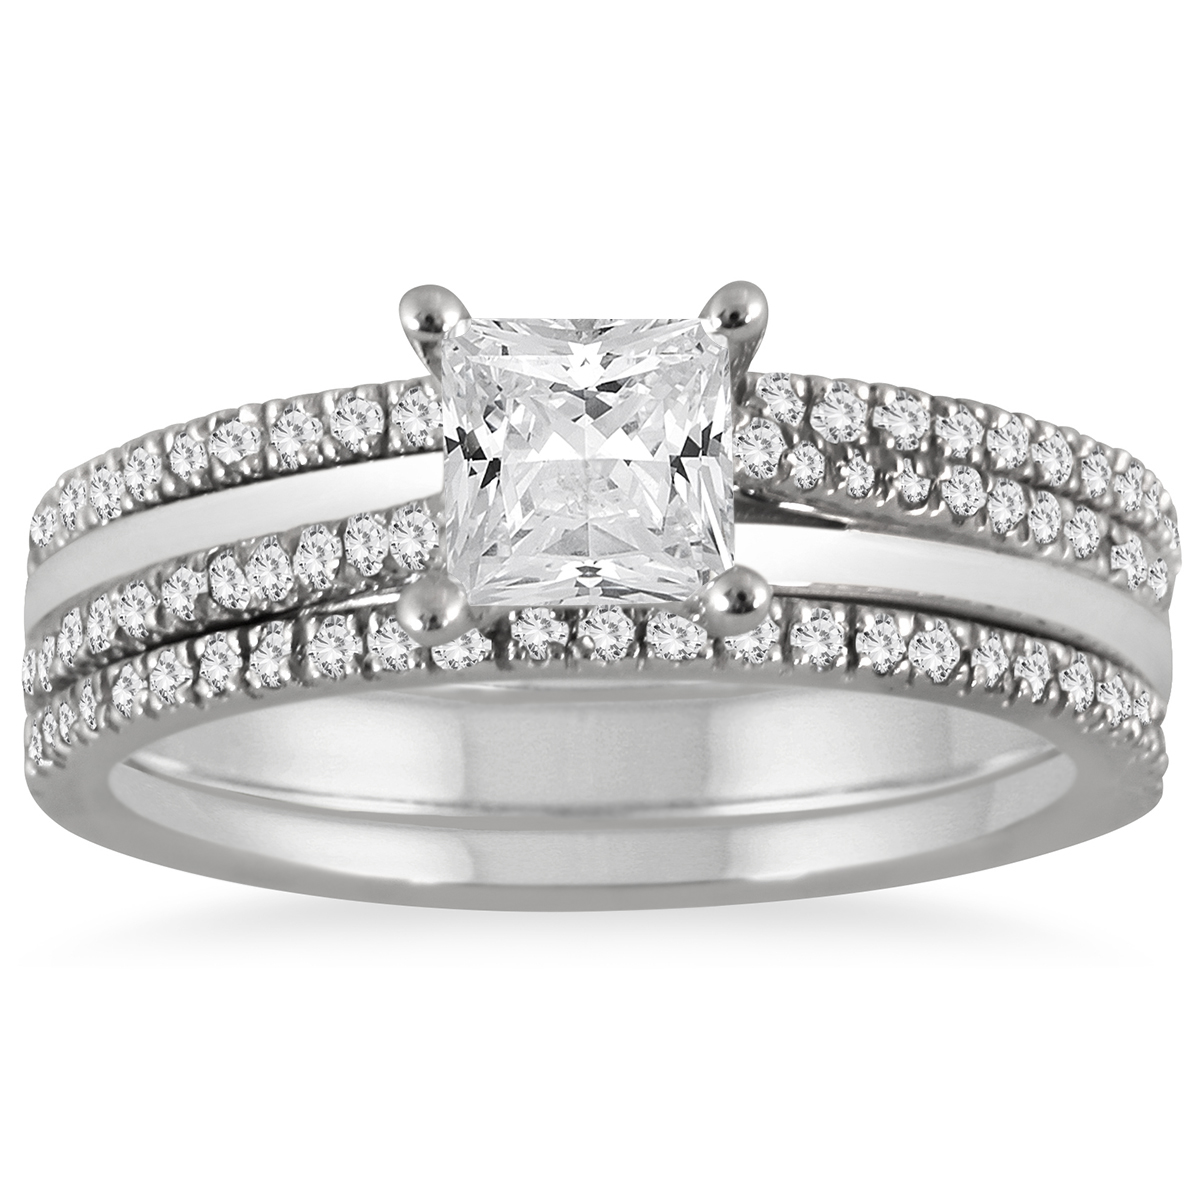 1 1/8 Carat TW Princess Cut Diamond Three Piece Bridal Set in 14K White Gold